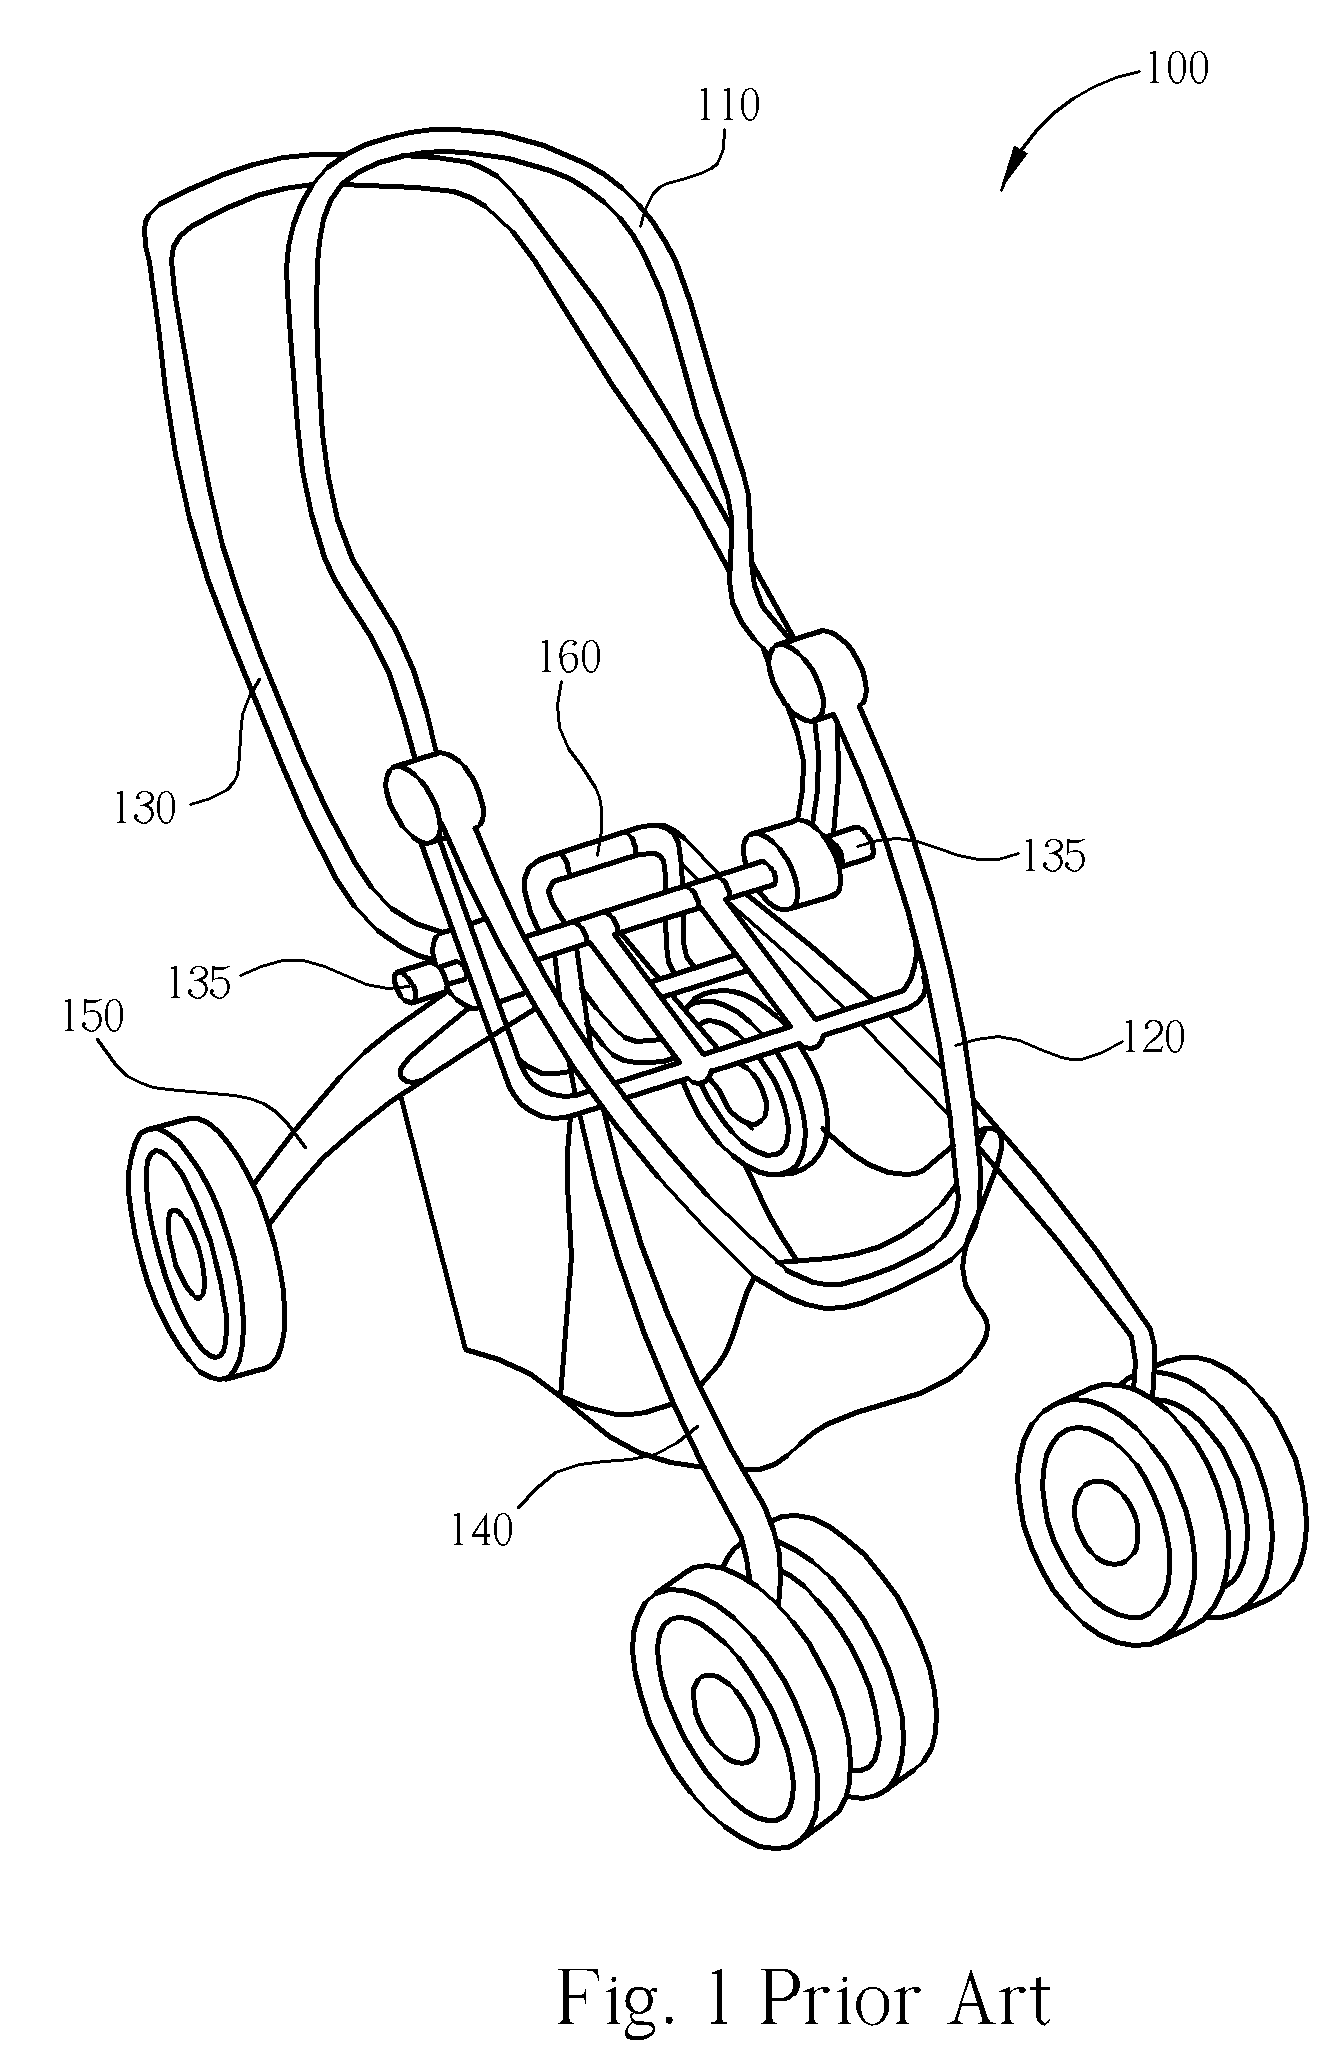 Stroller having a single folding shaft